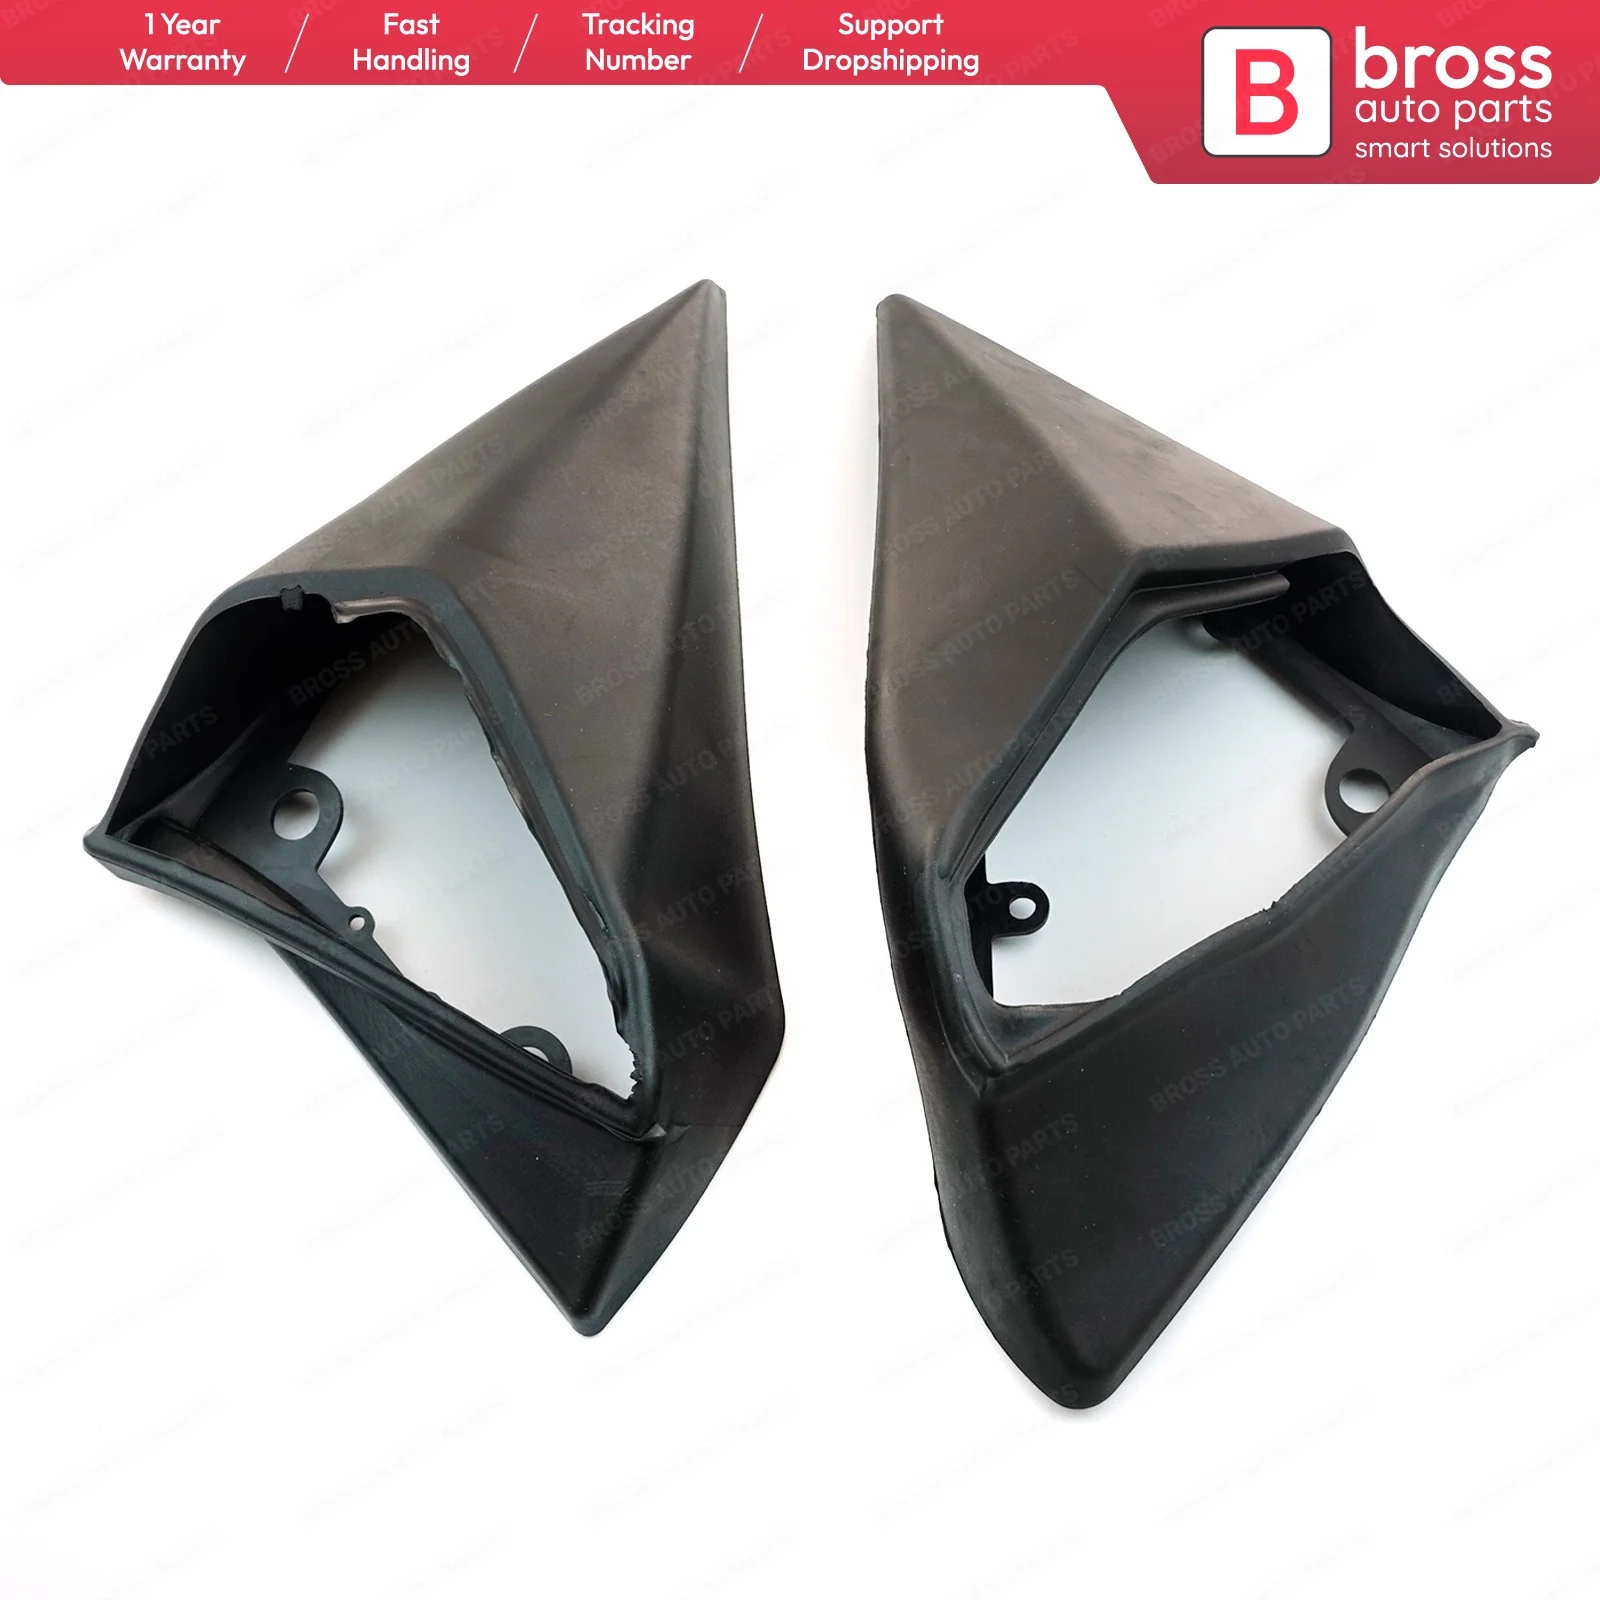 Bross BSP846FBA Exterior Mirror Rubber Seals Pads L+R A1248107716 for Mercedes Benz W201/ W124 Bross Auto Parts